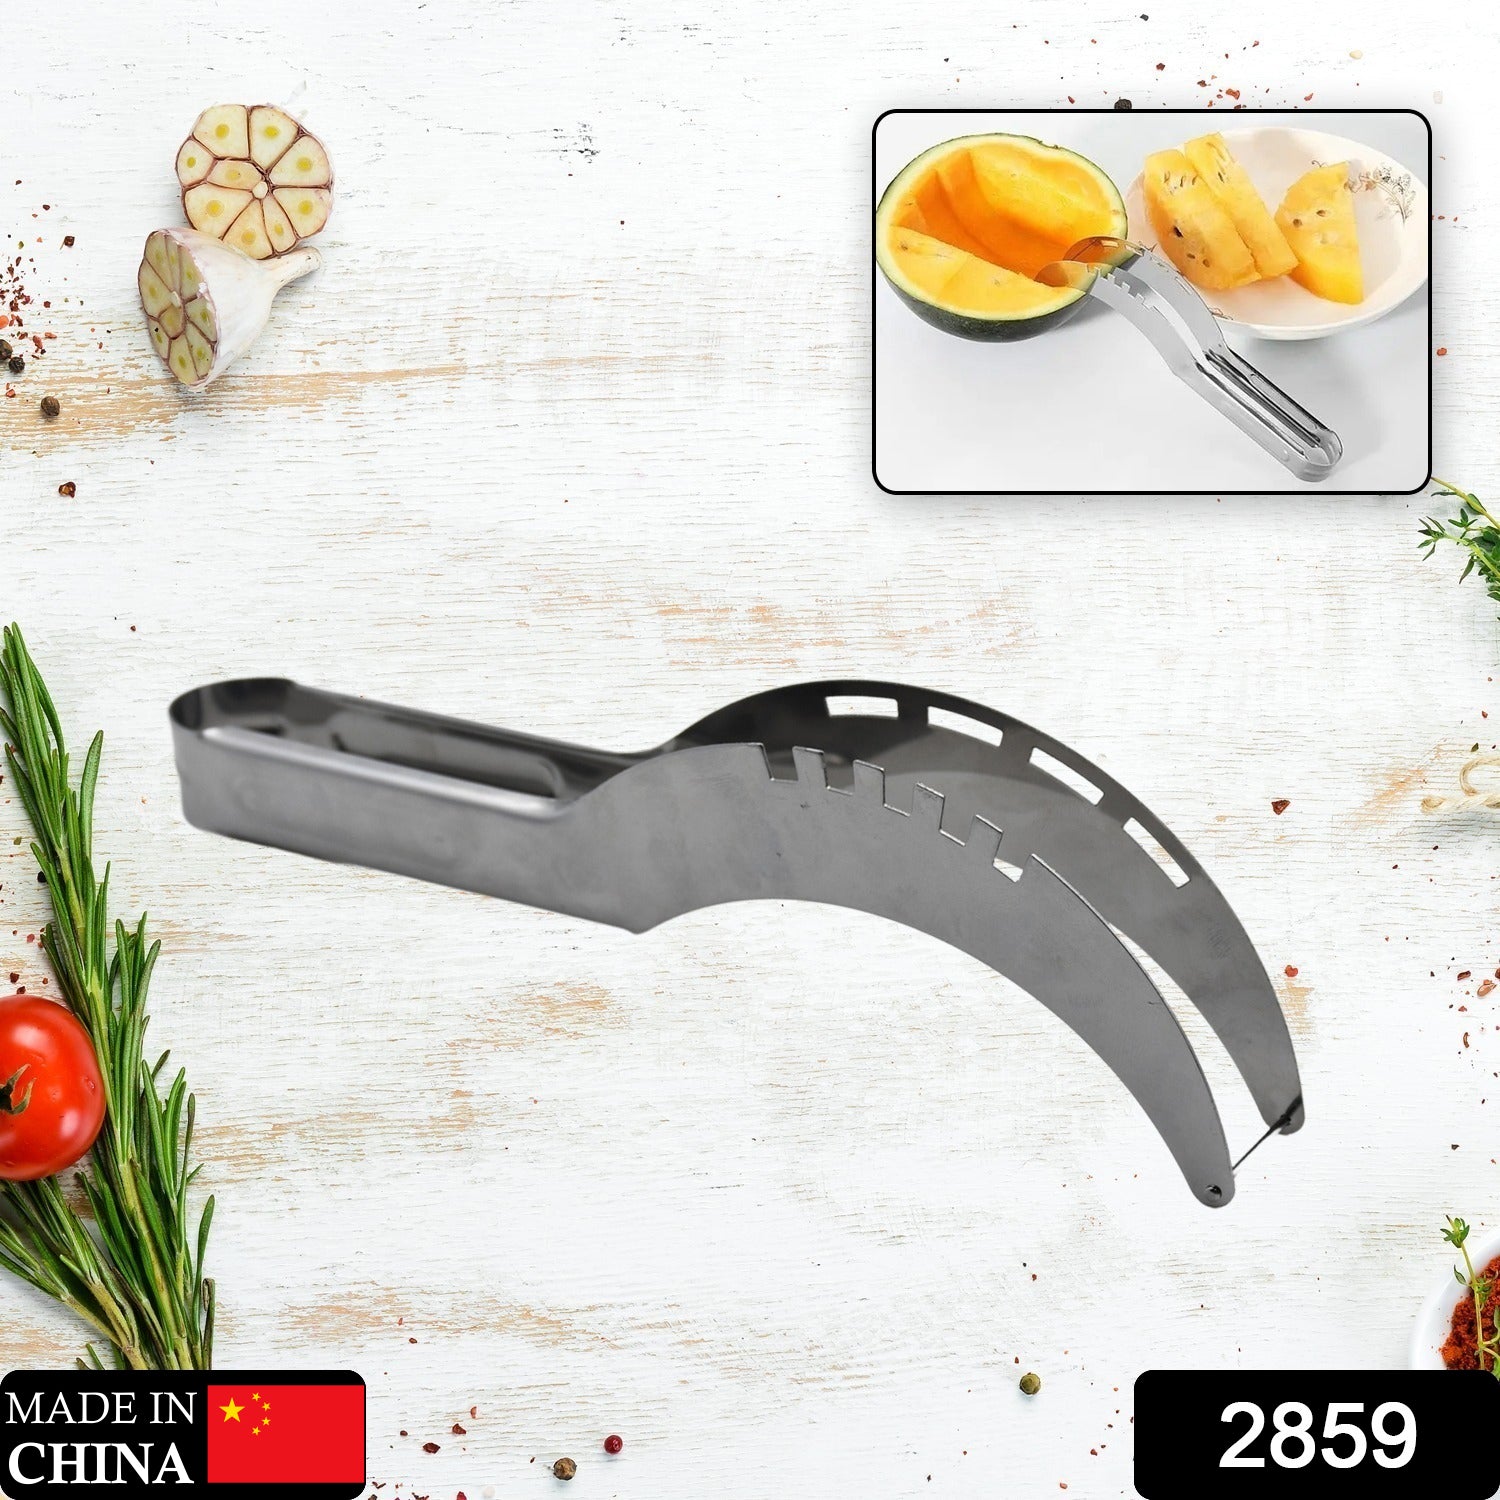 2859  Stainless Steel Watermelon Cantaloupe Slicer Knife, Corer Fruit, Vegetable Tools Kitchen